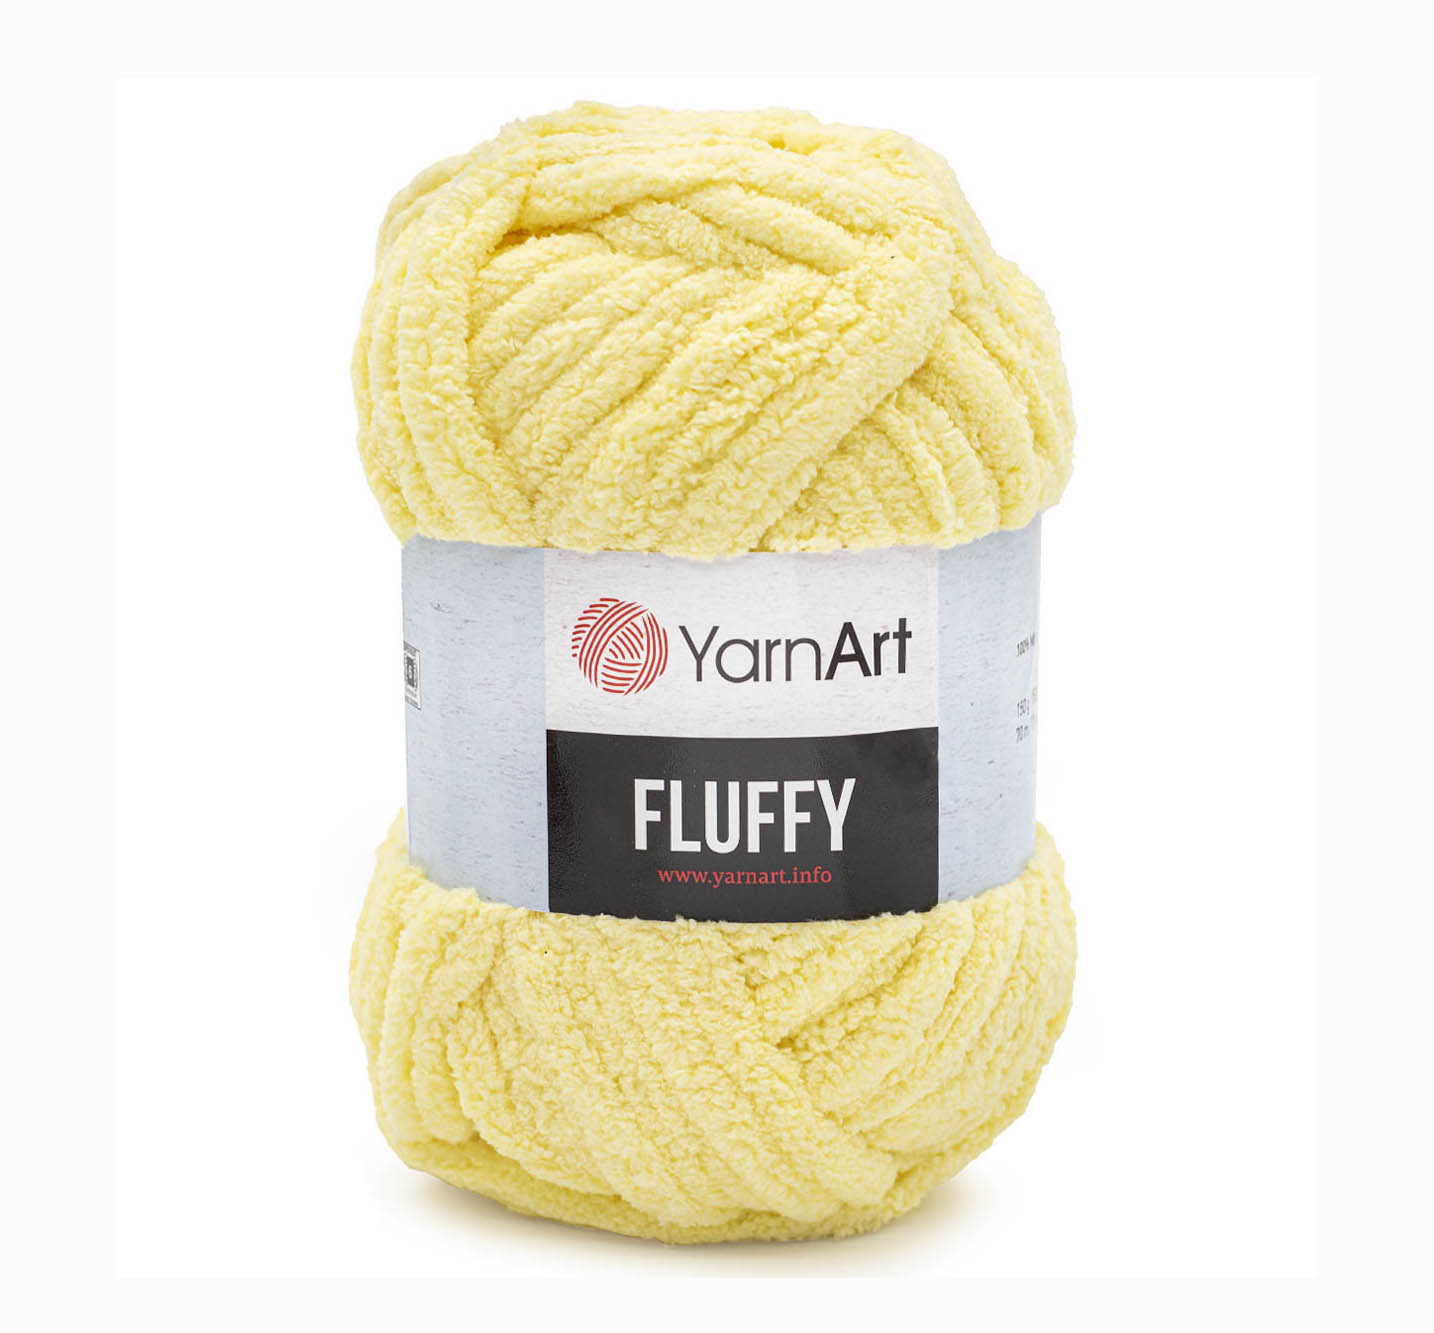 YarnArt Fluffy 716 -